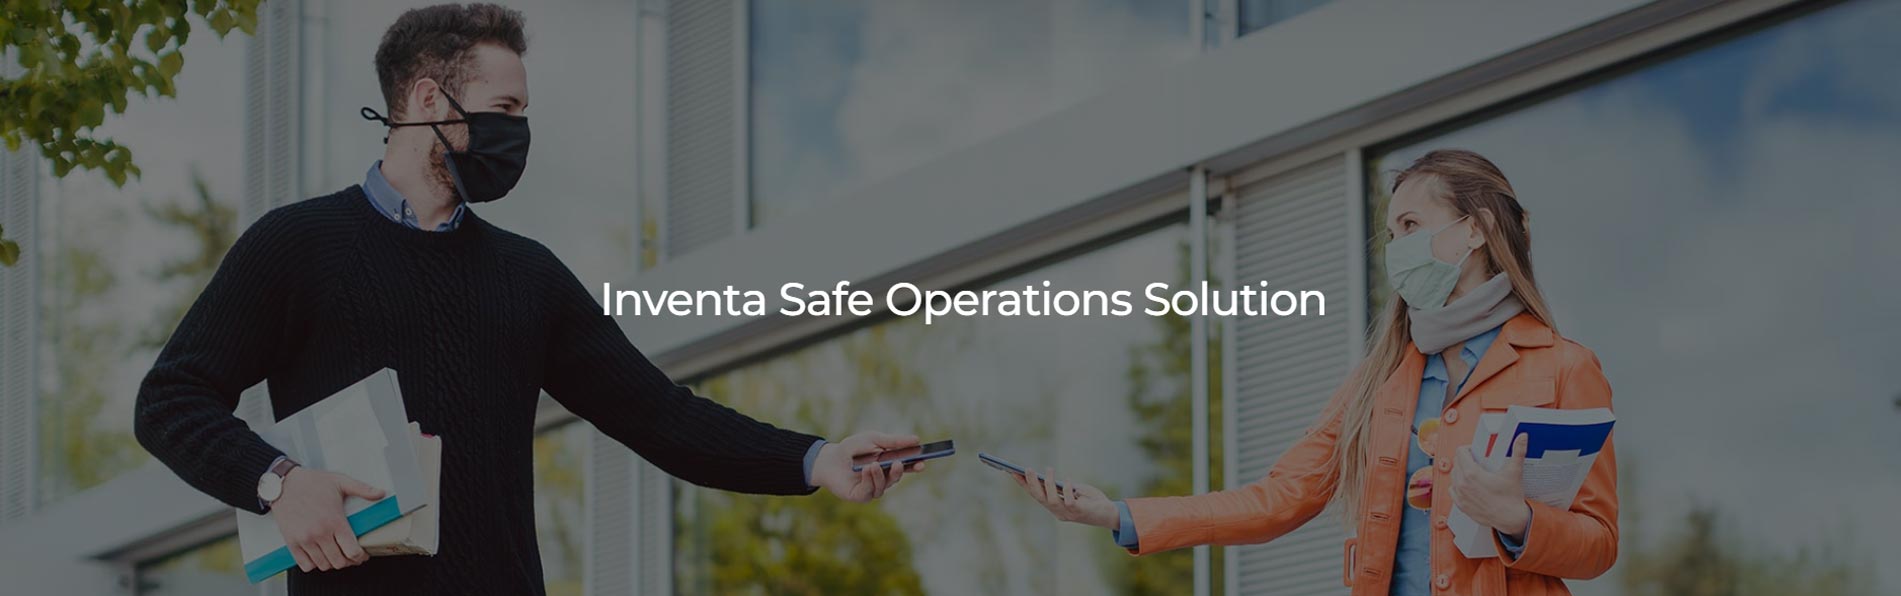 Inventa Safe Operations Solution